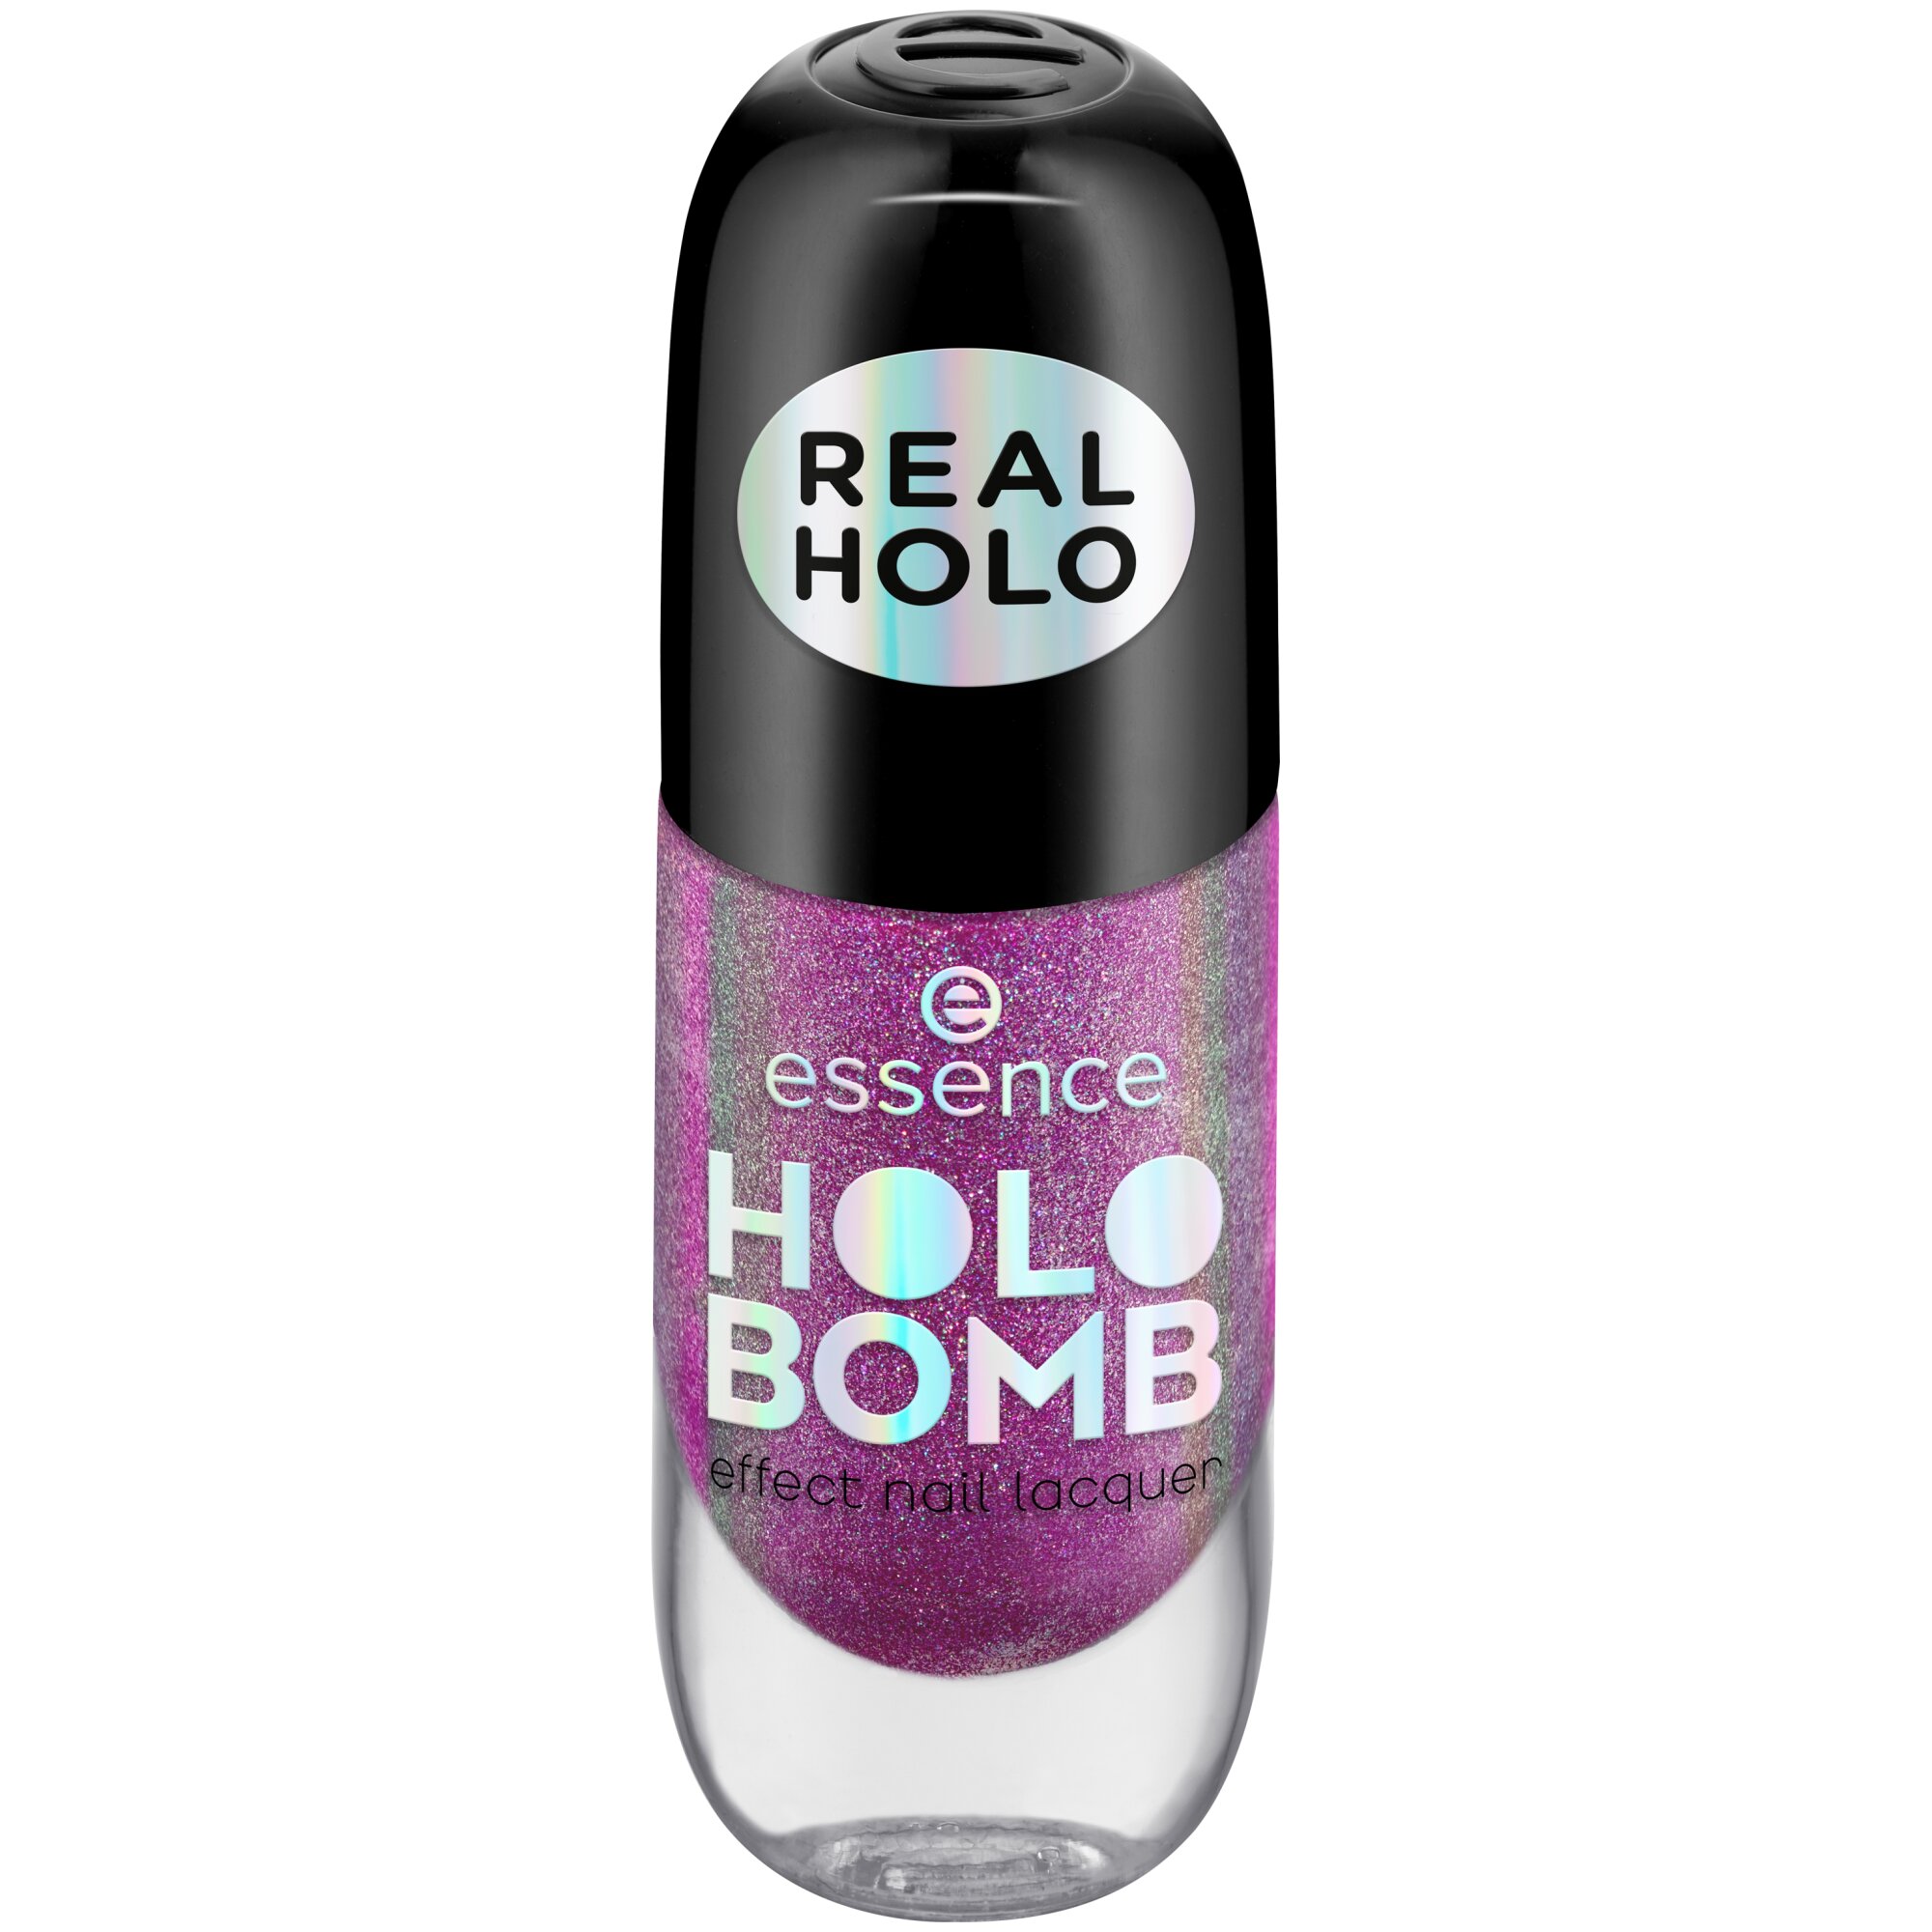 Lac pentru unghii Holo Bomb, 02 - Holo Moly, 8 ml, Essence